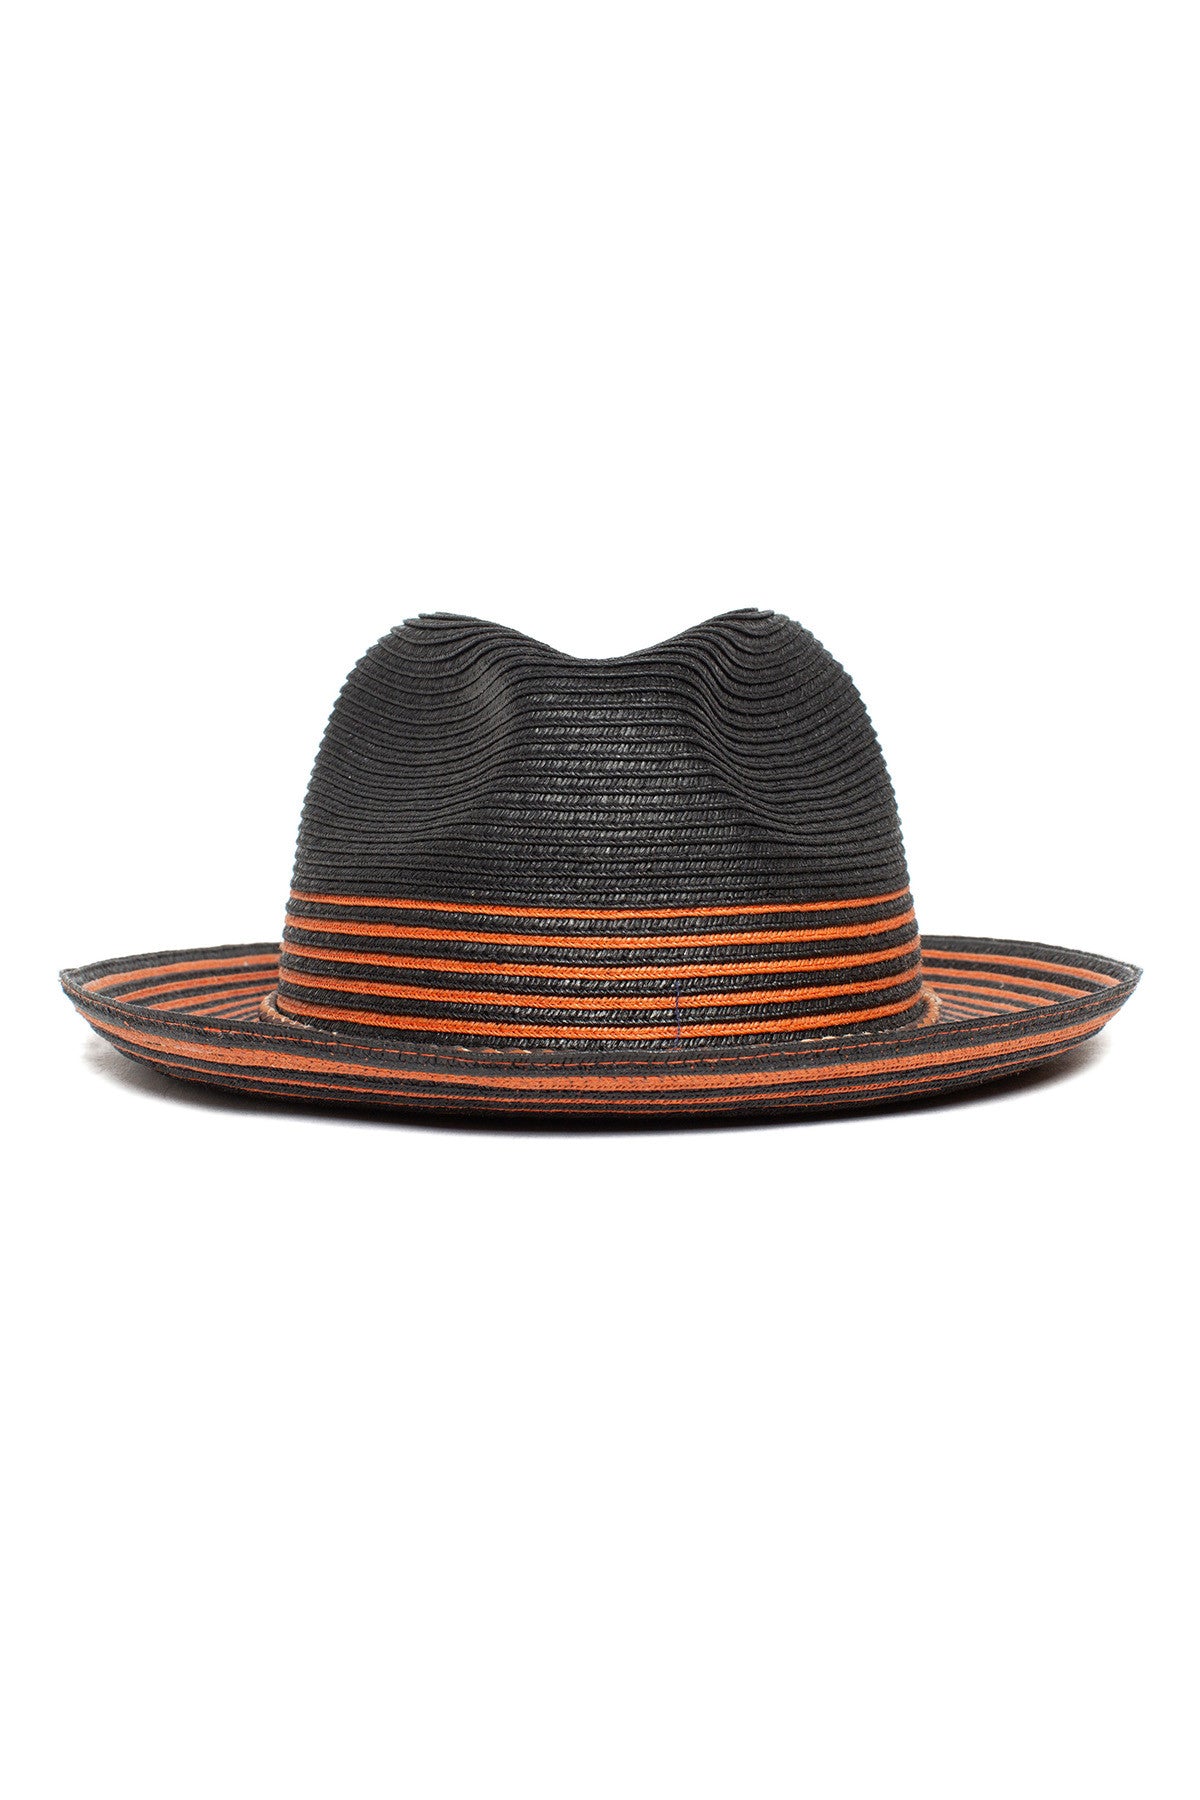 Goorin Bros Sweetie Souse Hat Black